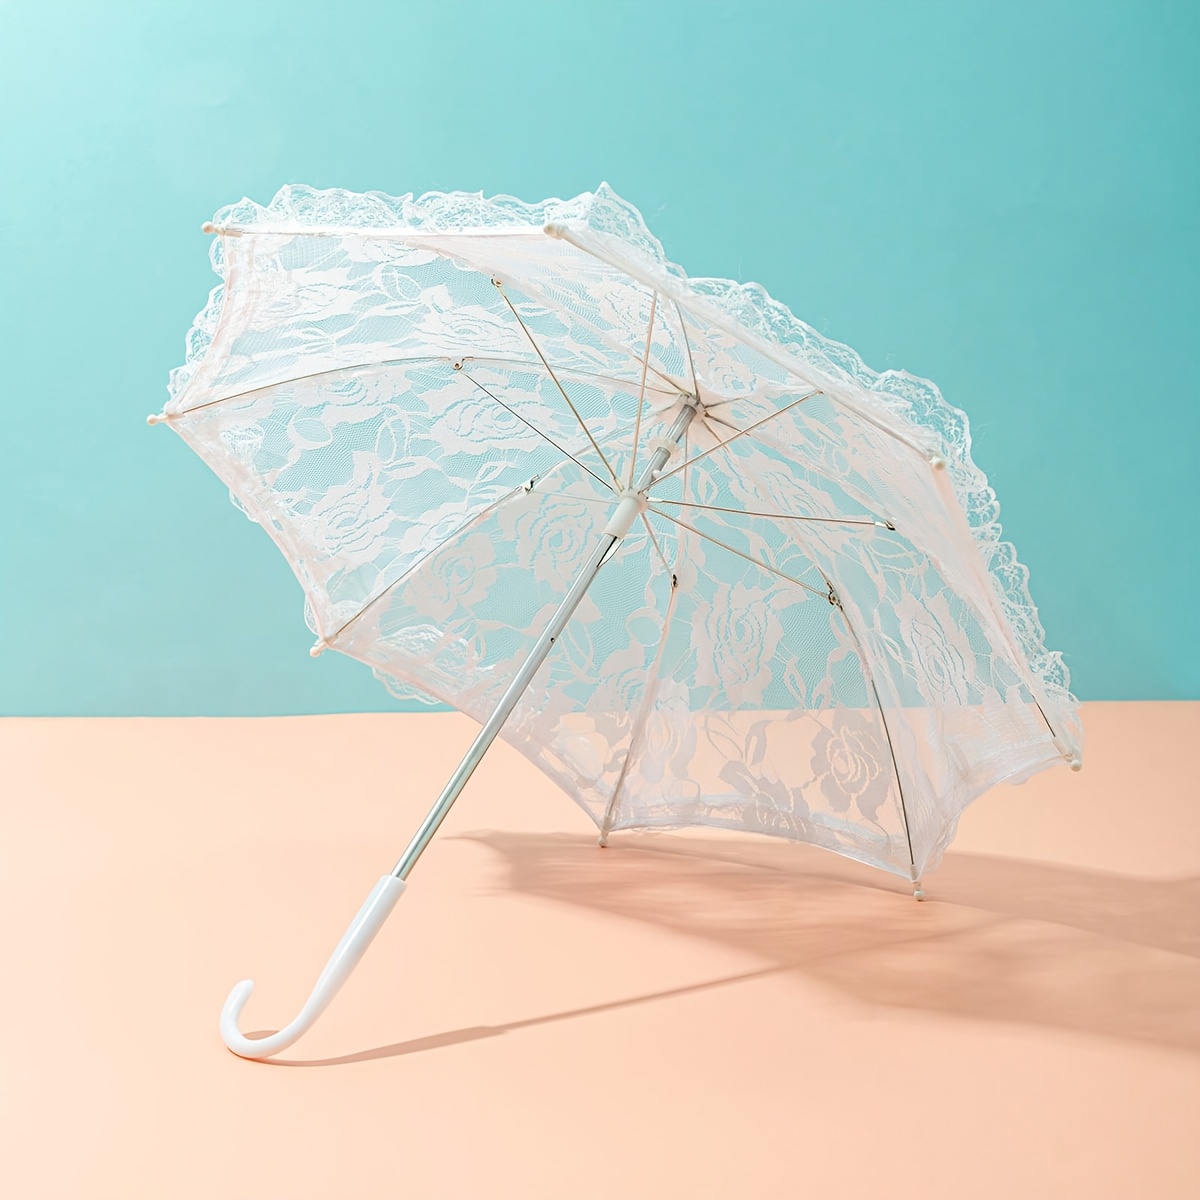 

Elegant White Lace Wedding Umbrella, Romantic Bridal Lace Parasol With Ruffle Trim, Perfect For Photo Props, Weddings, Parties, Bachelorette